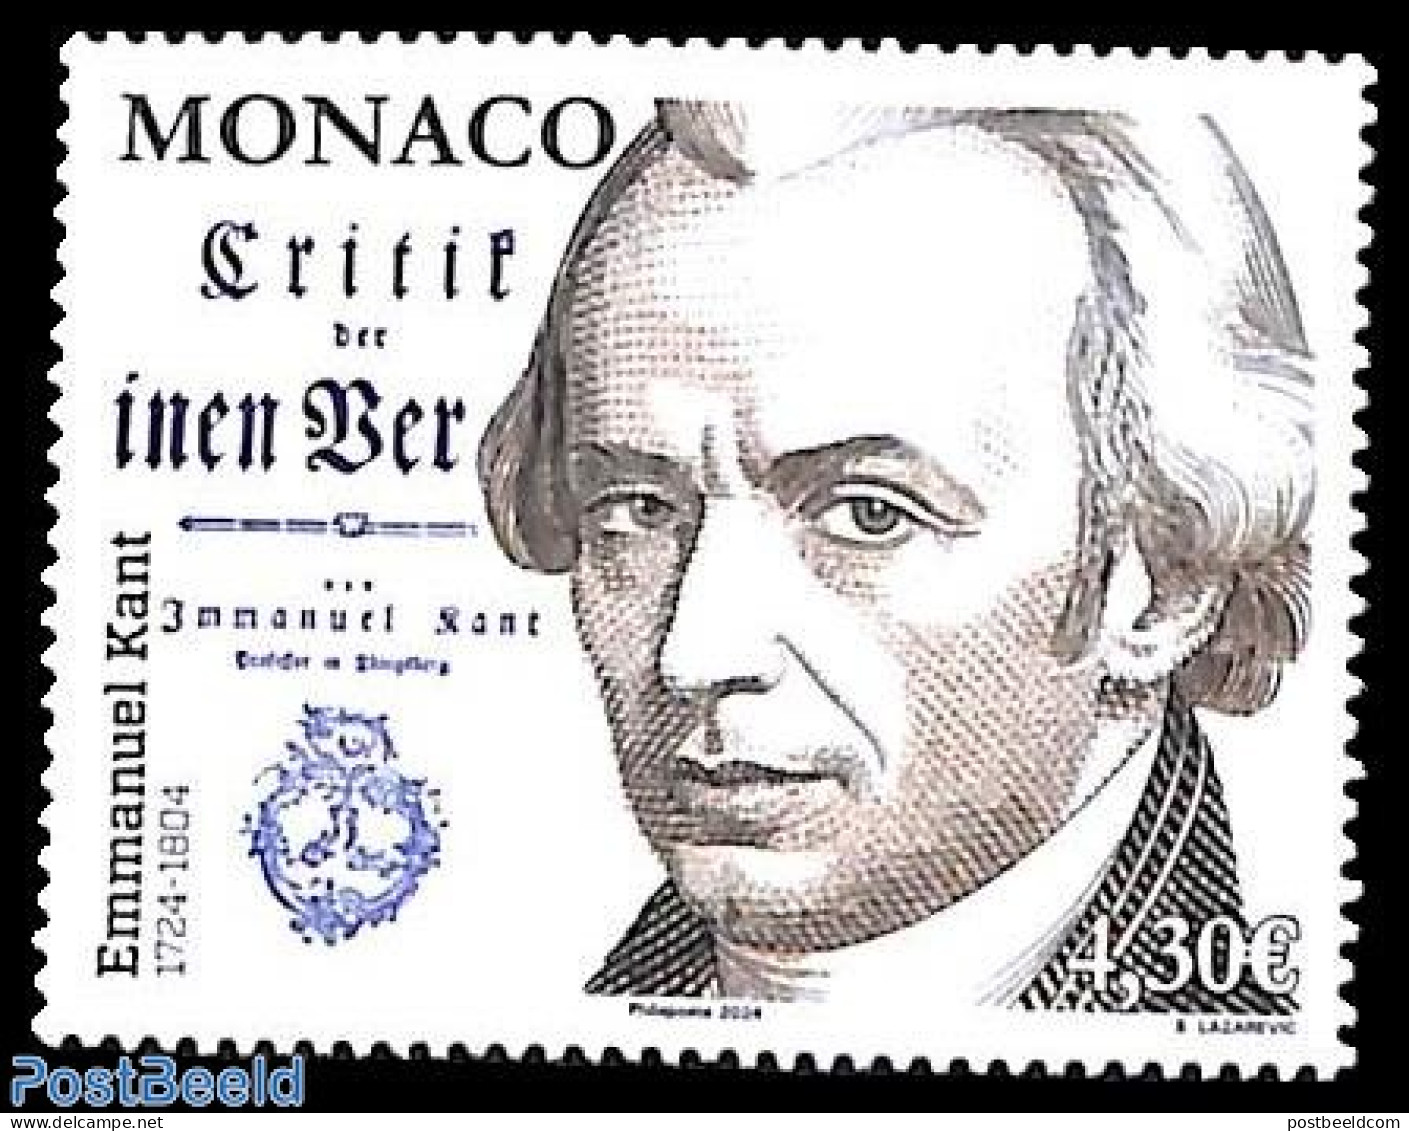 Monaco 2024 Emanuel Kant 1v, Mint NH - Ungebraucht